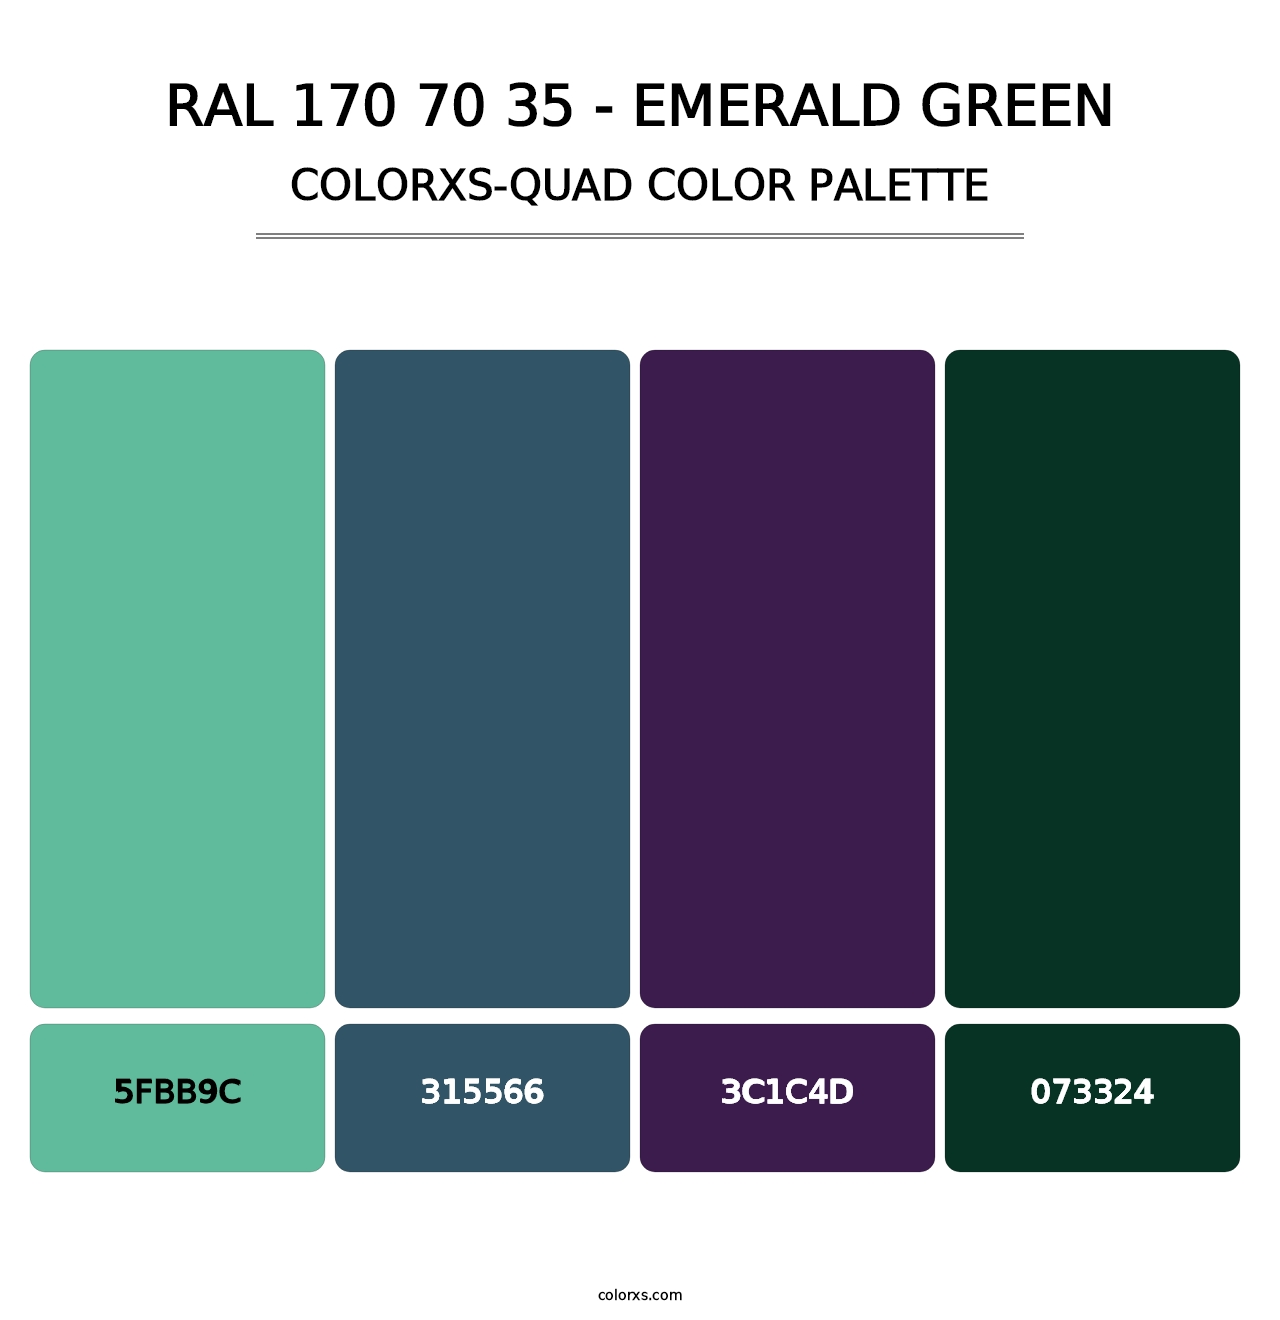 RAL 170 70 35 - Emerald Green - Colorxs Quad Palette